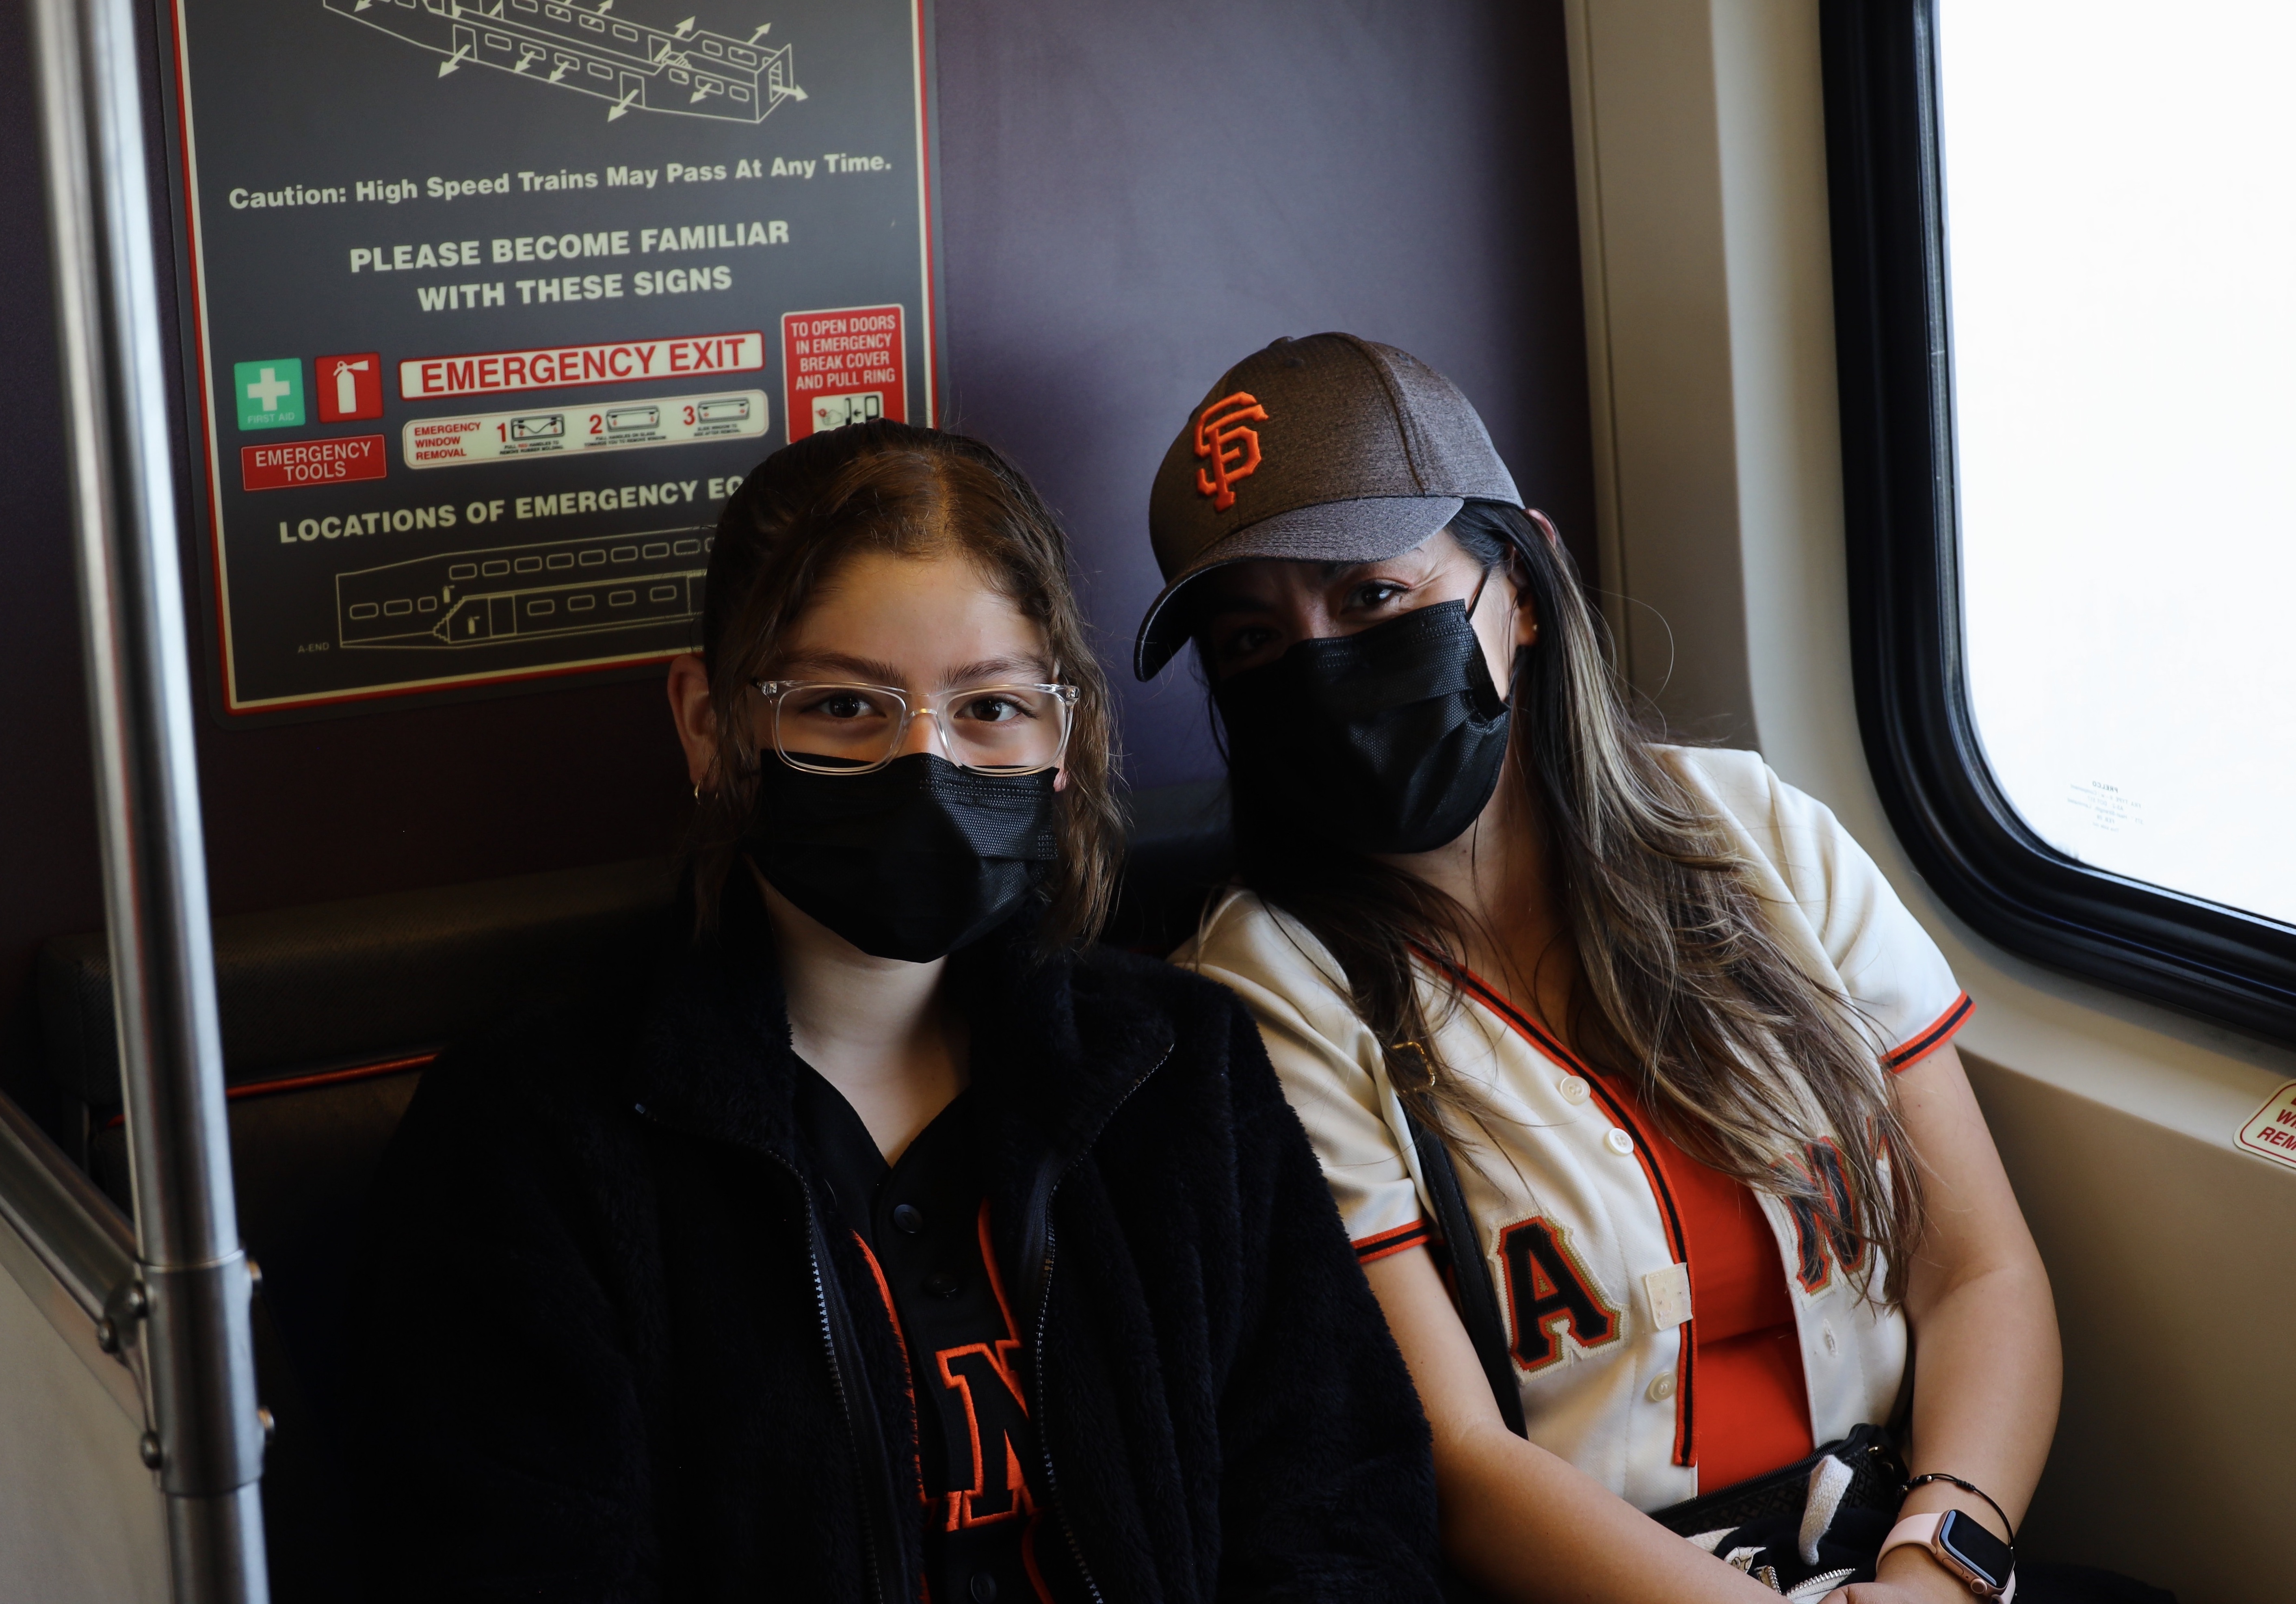 Giants fans on the train wearing masks